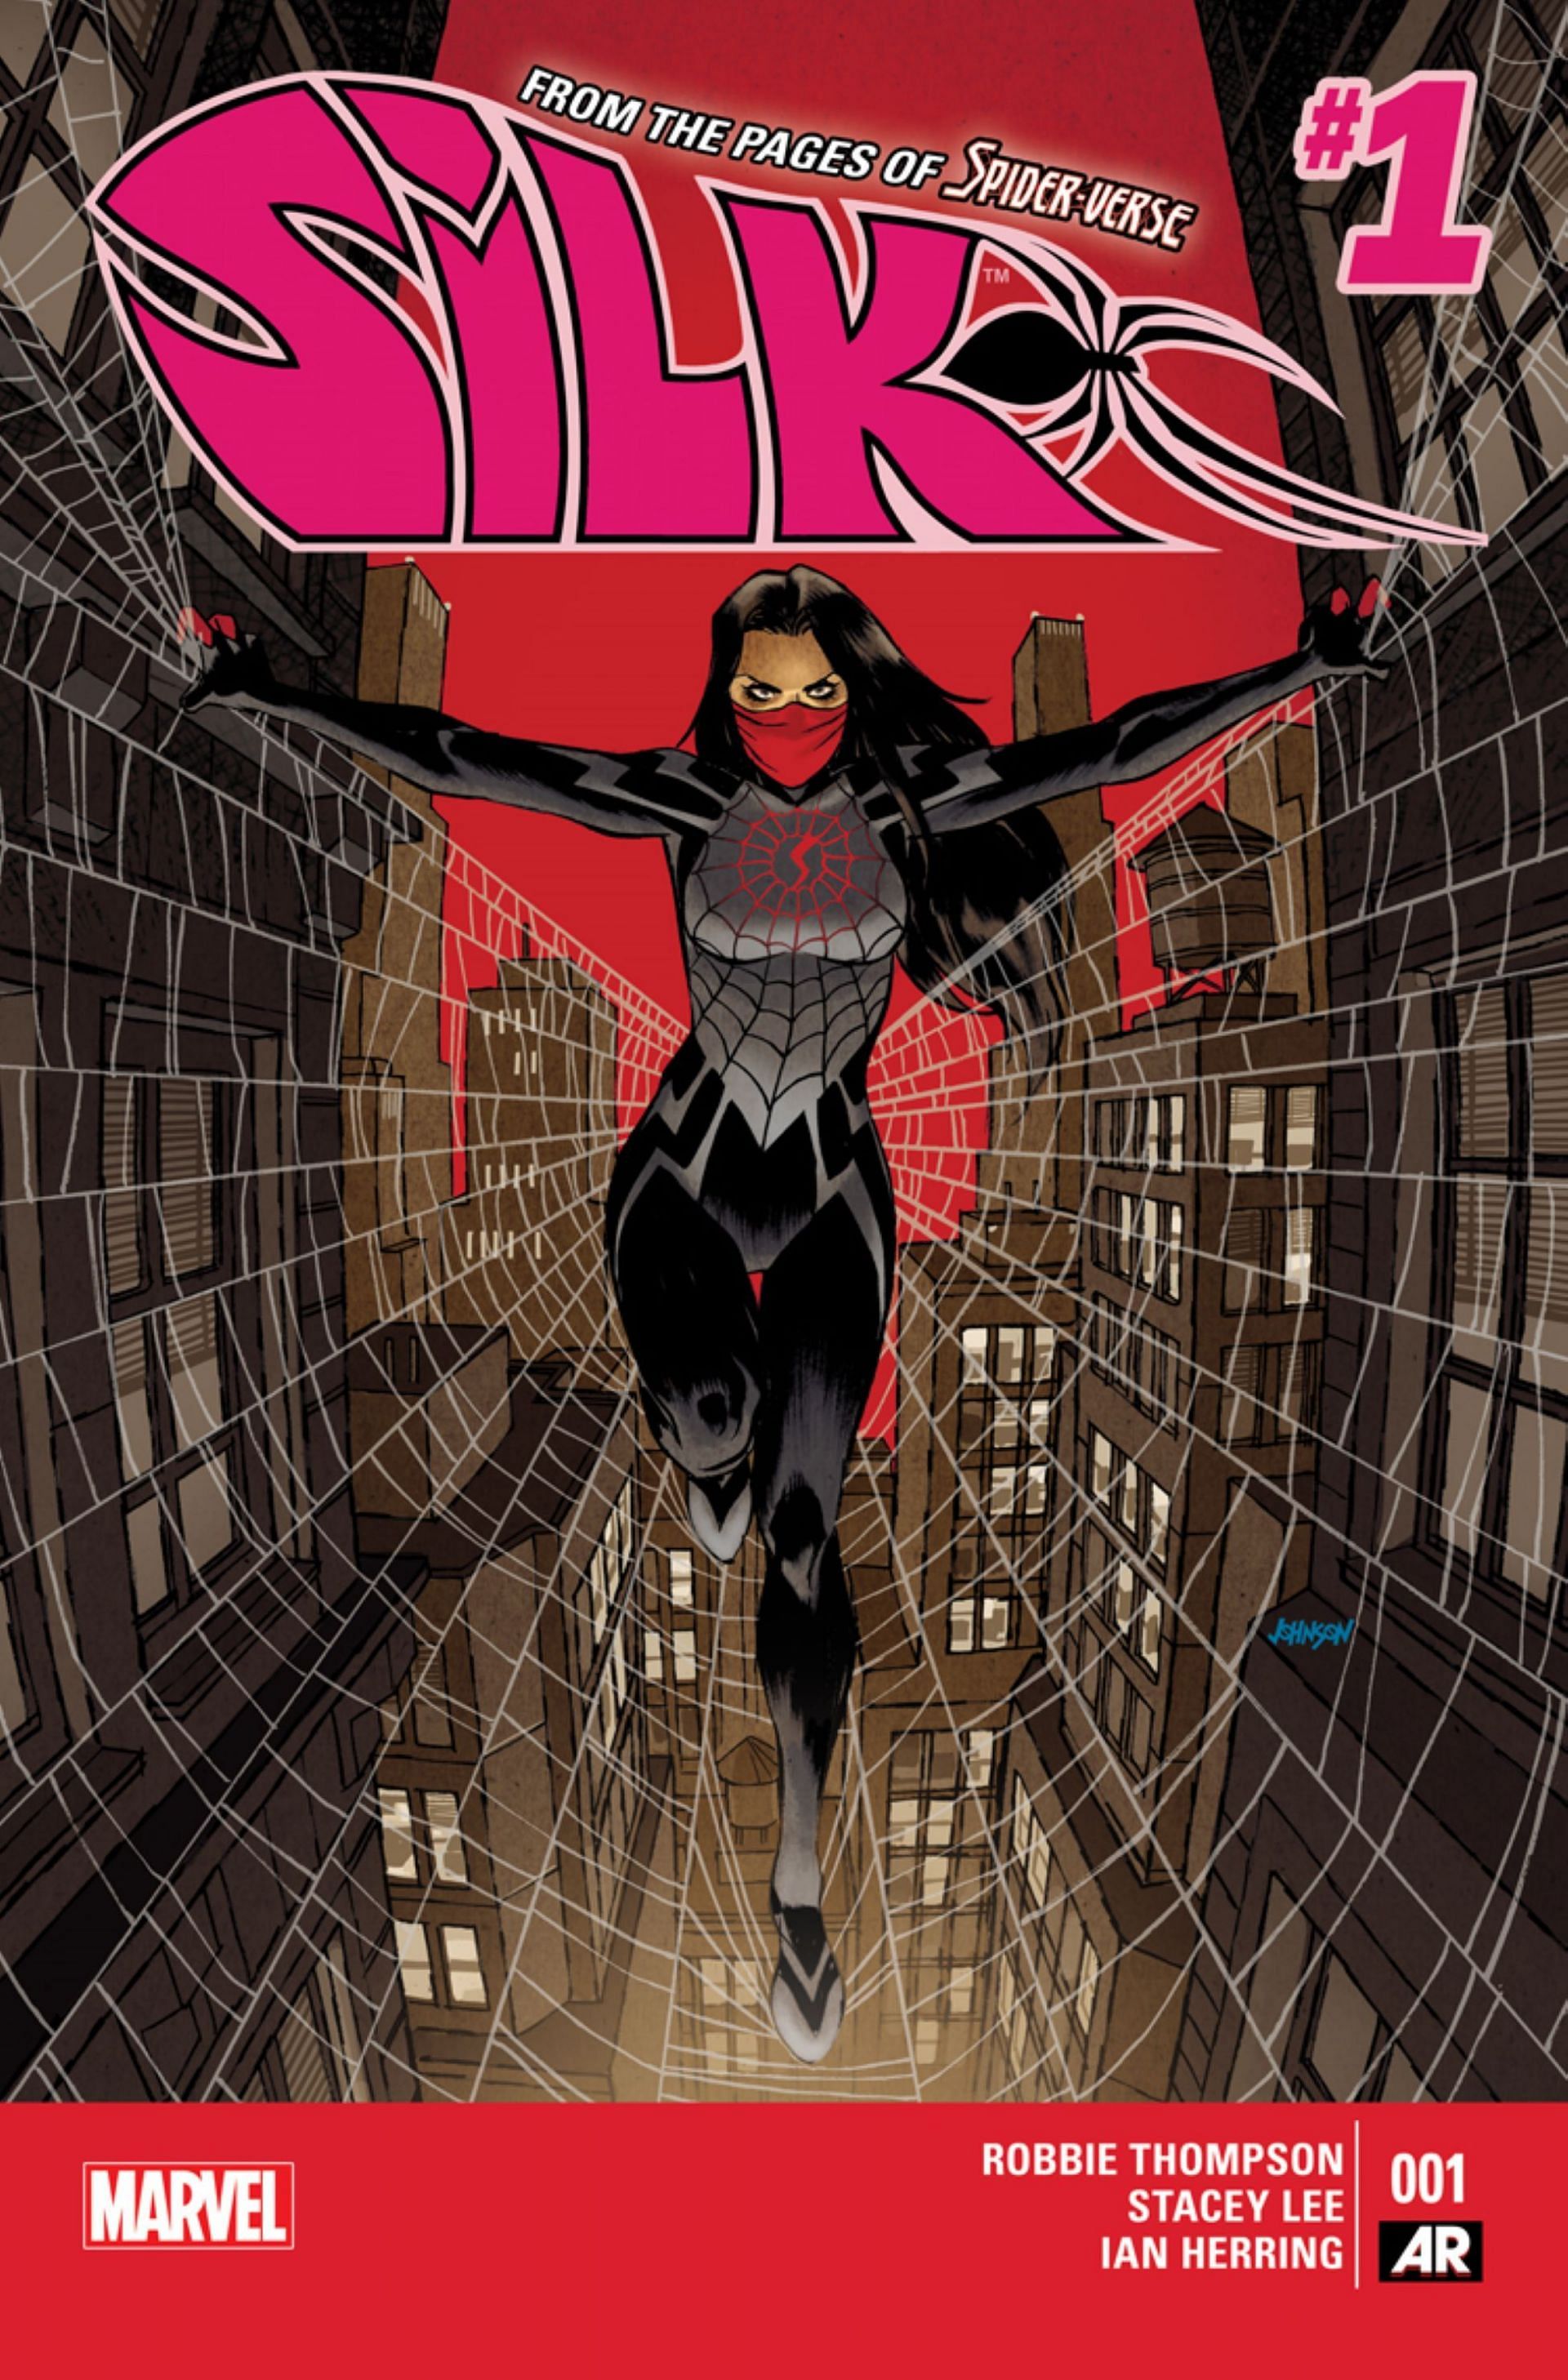 Silk #1 was published on January 19, 2022 (Image via Marvel)